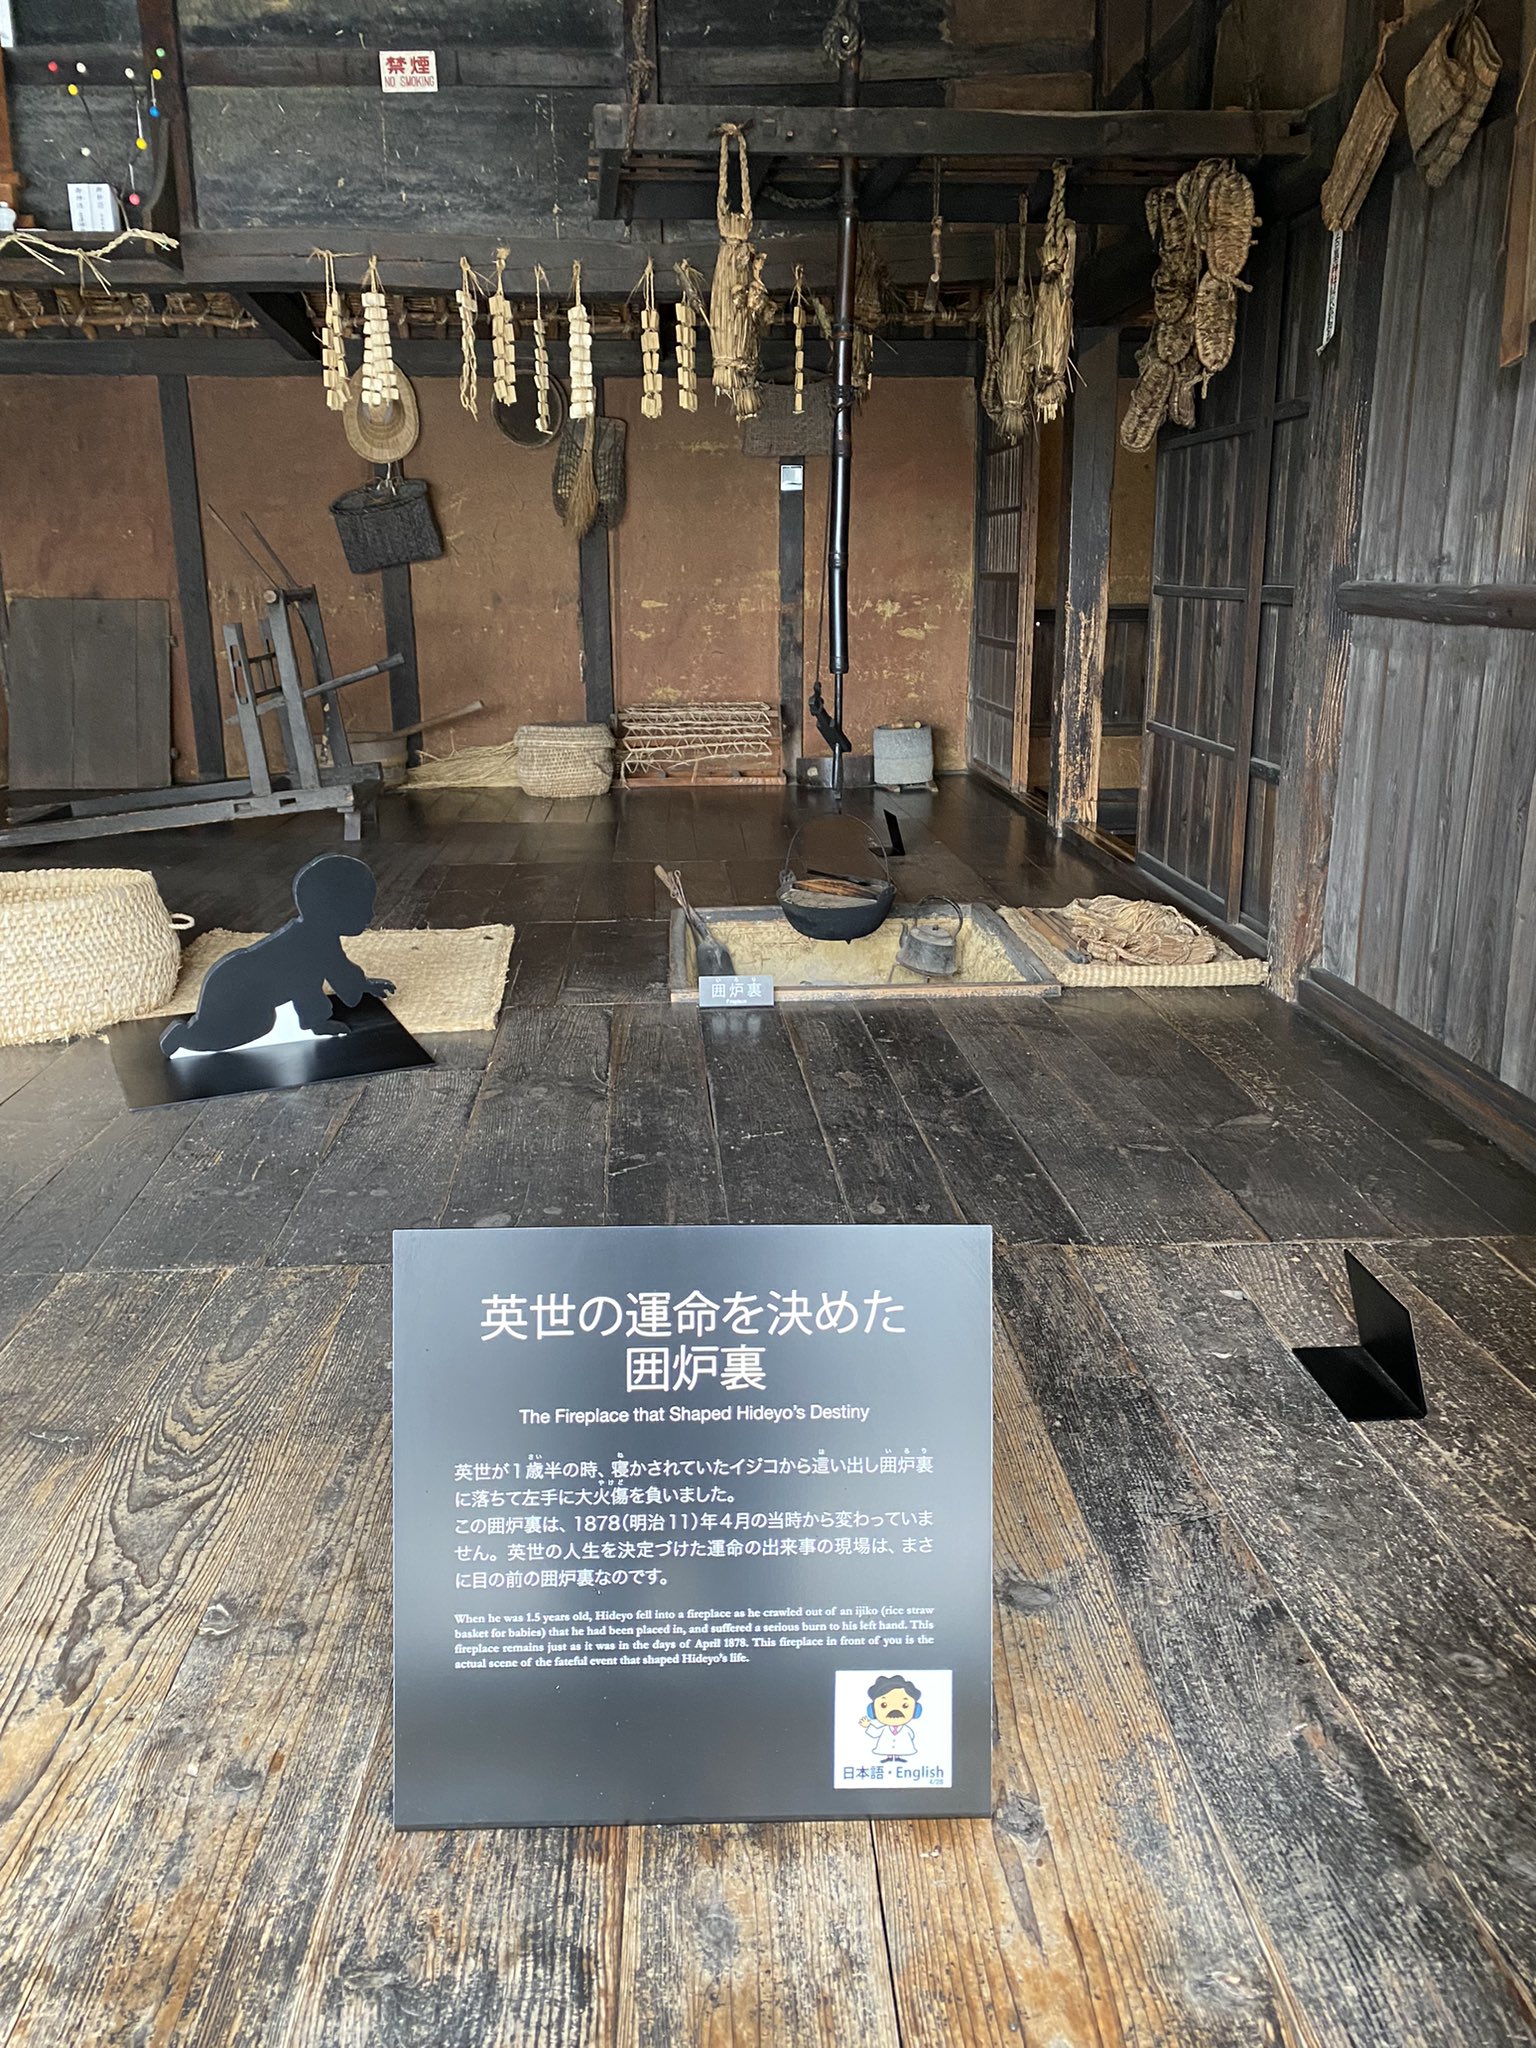 野口英世記念館 公式 Hideyo Noguchi Memorial Museum Hideyonoguchimf Twitter